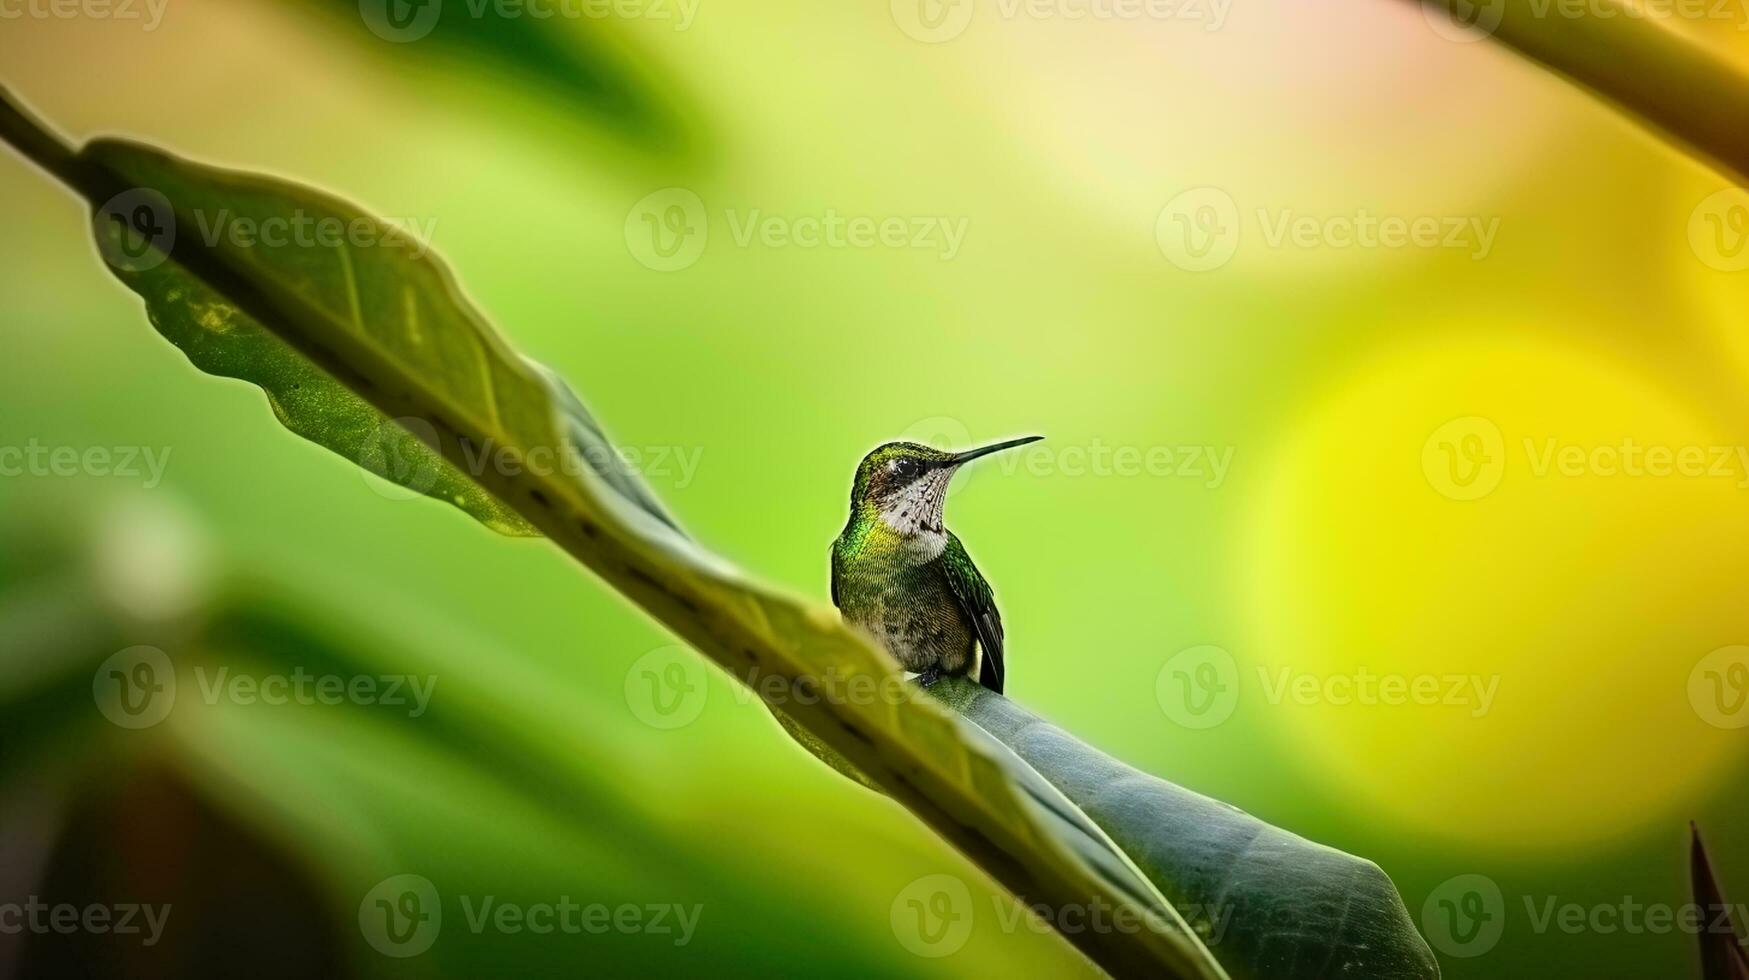 Small colibri sitting on green leaf on blurred background of verdant foliage. Generative AI photo